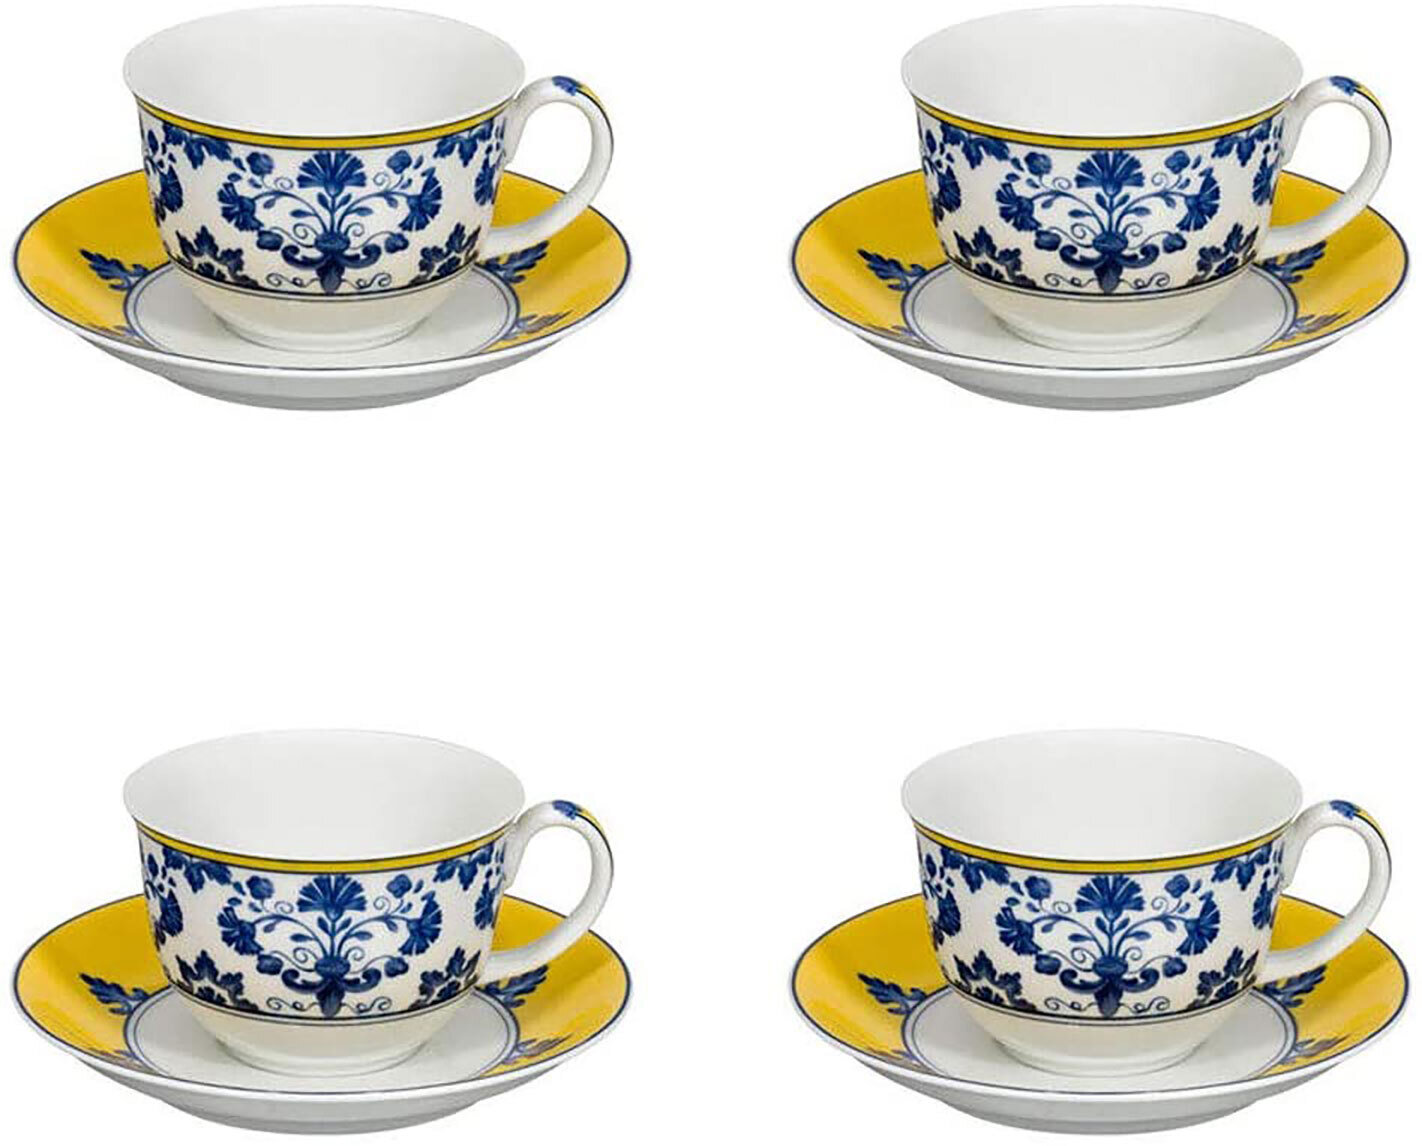 Vista Alegre Castelo Branco Tea Cup And Saucer Set of 4 21125971